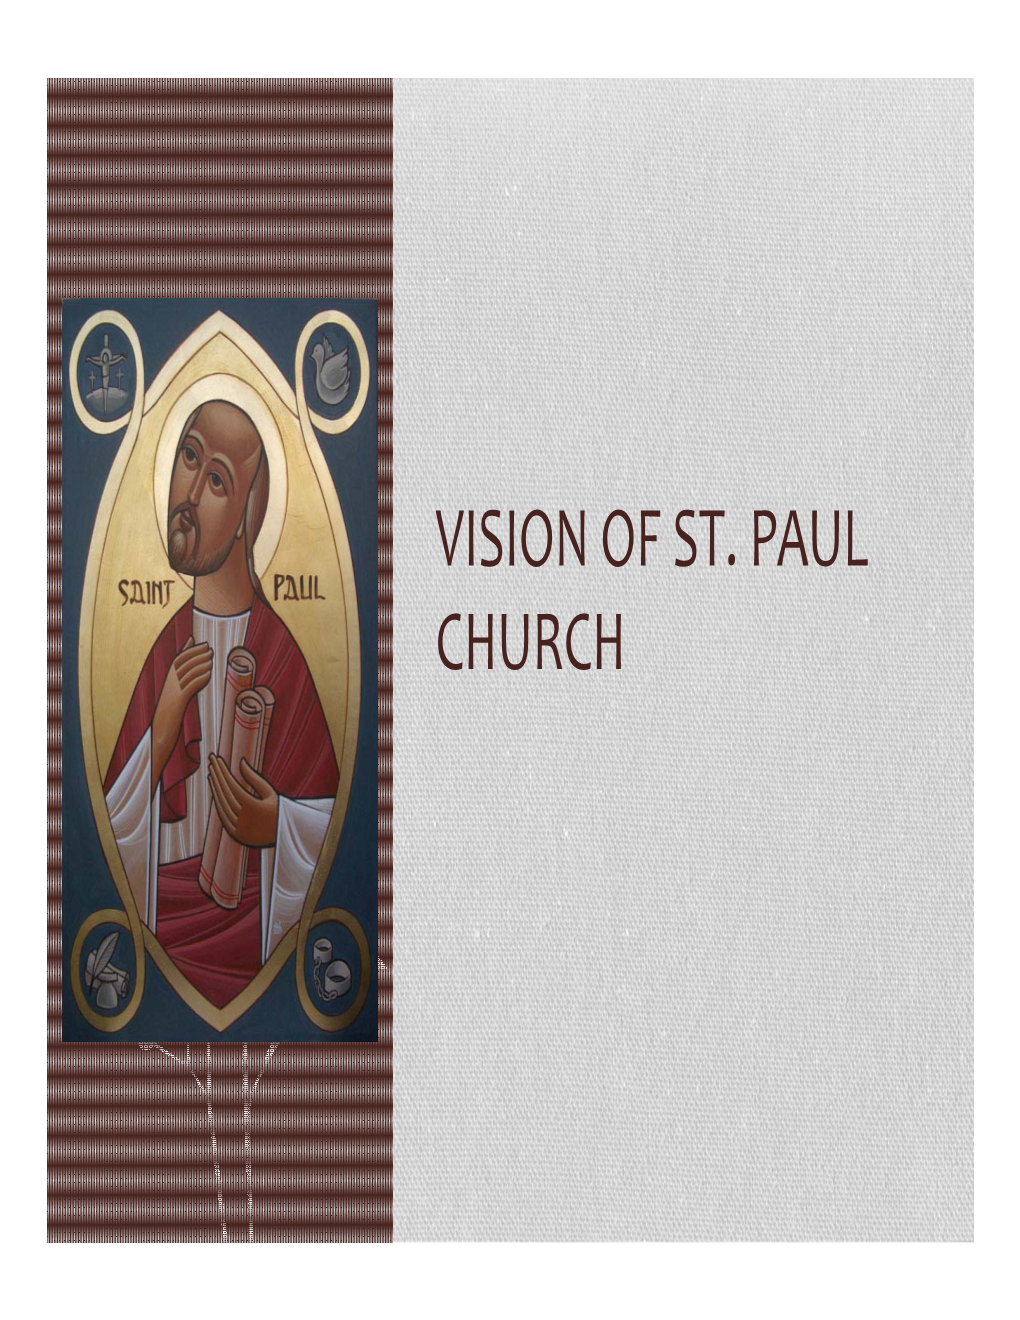 Vision of St. Paul Church